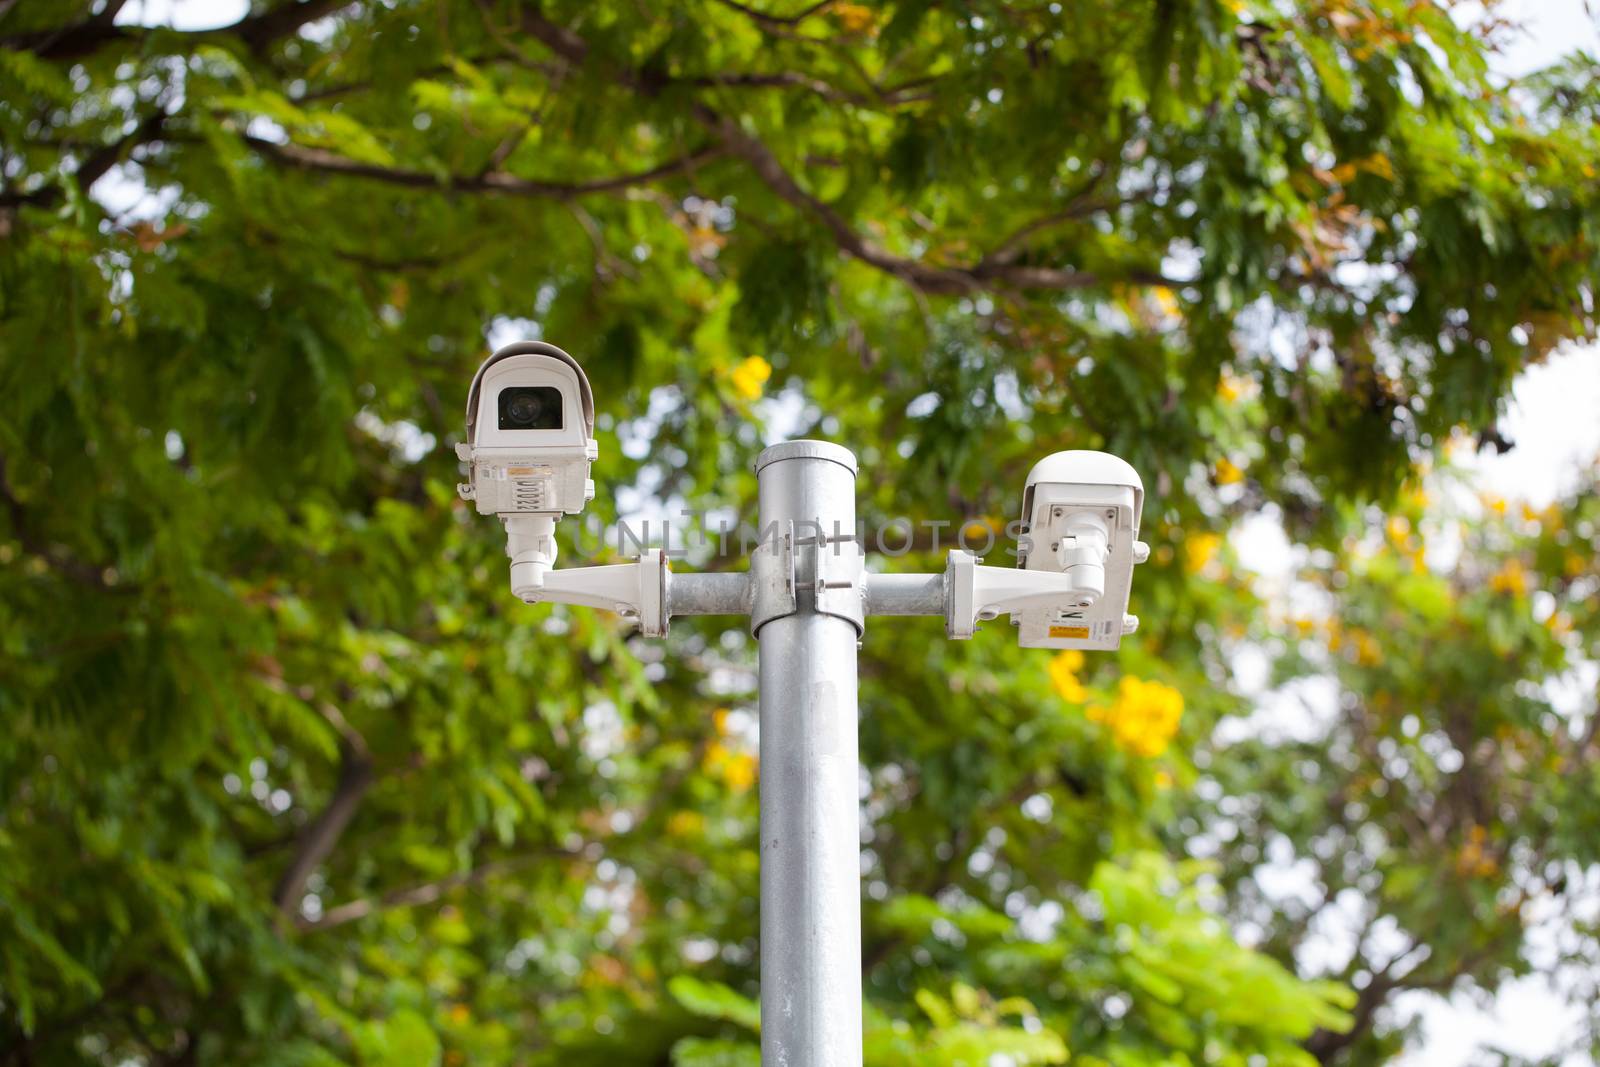 CCTV cameras on a pole by a454